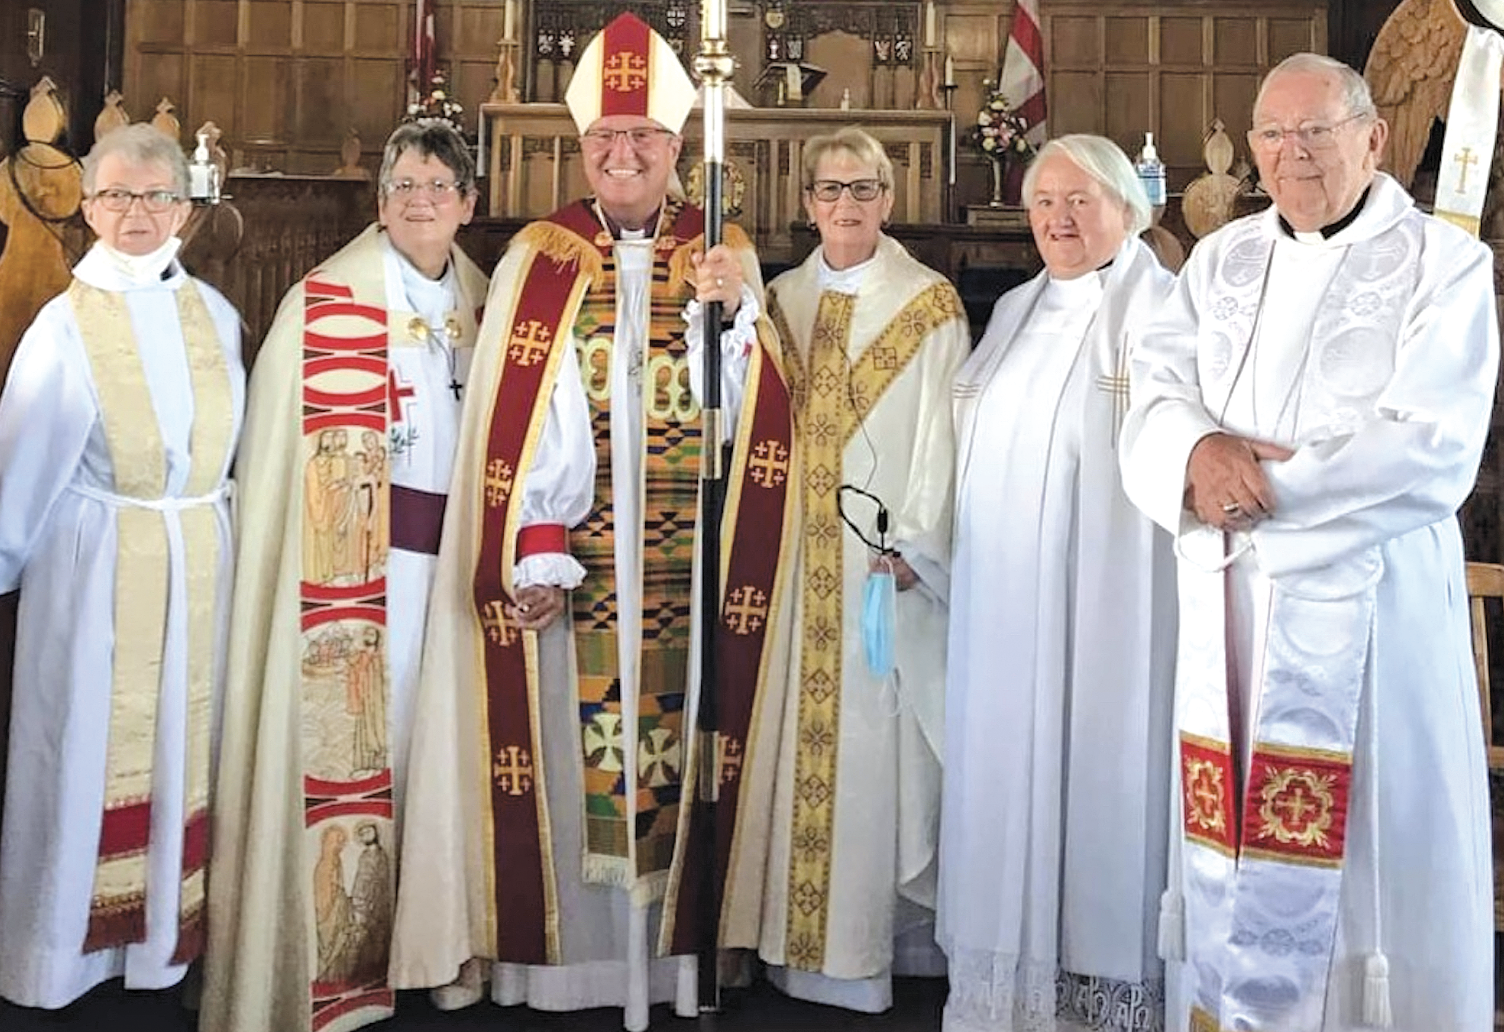 Rev’d Kathleen Knott, Dean Catherine Short, Bishop John Organ, Rev’d Jane Allen, Rev’d Dawn Barrett, and Rev’d George Critchell